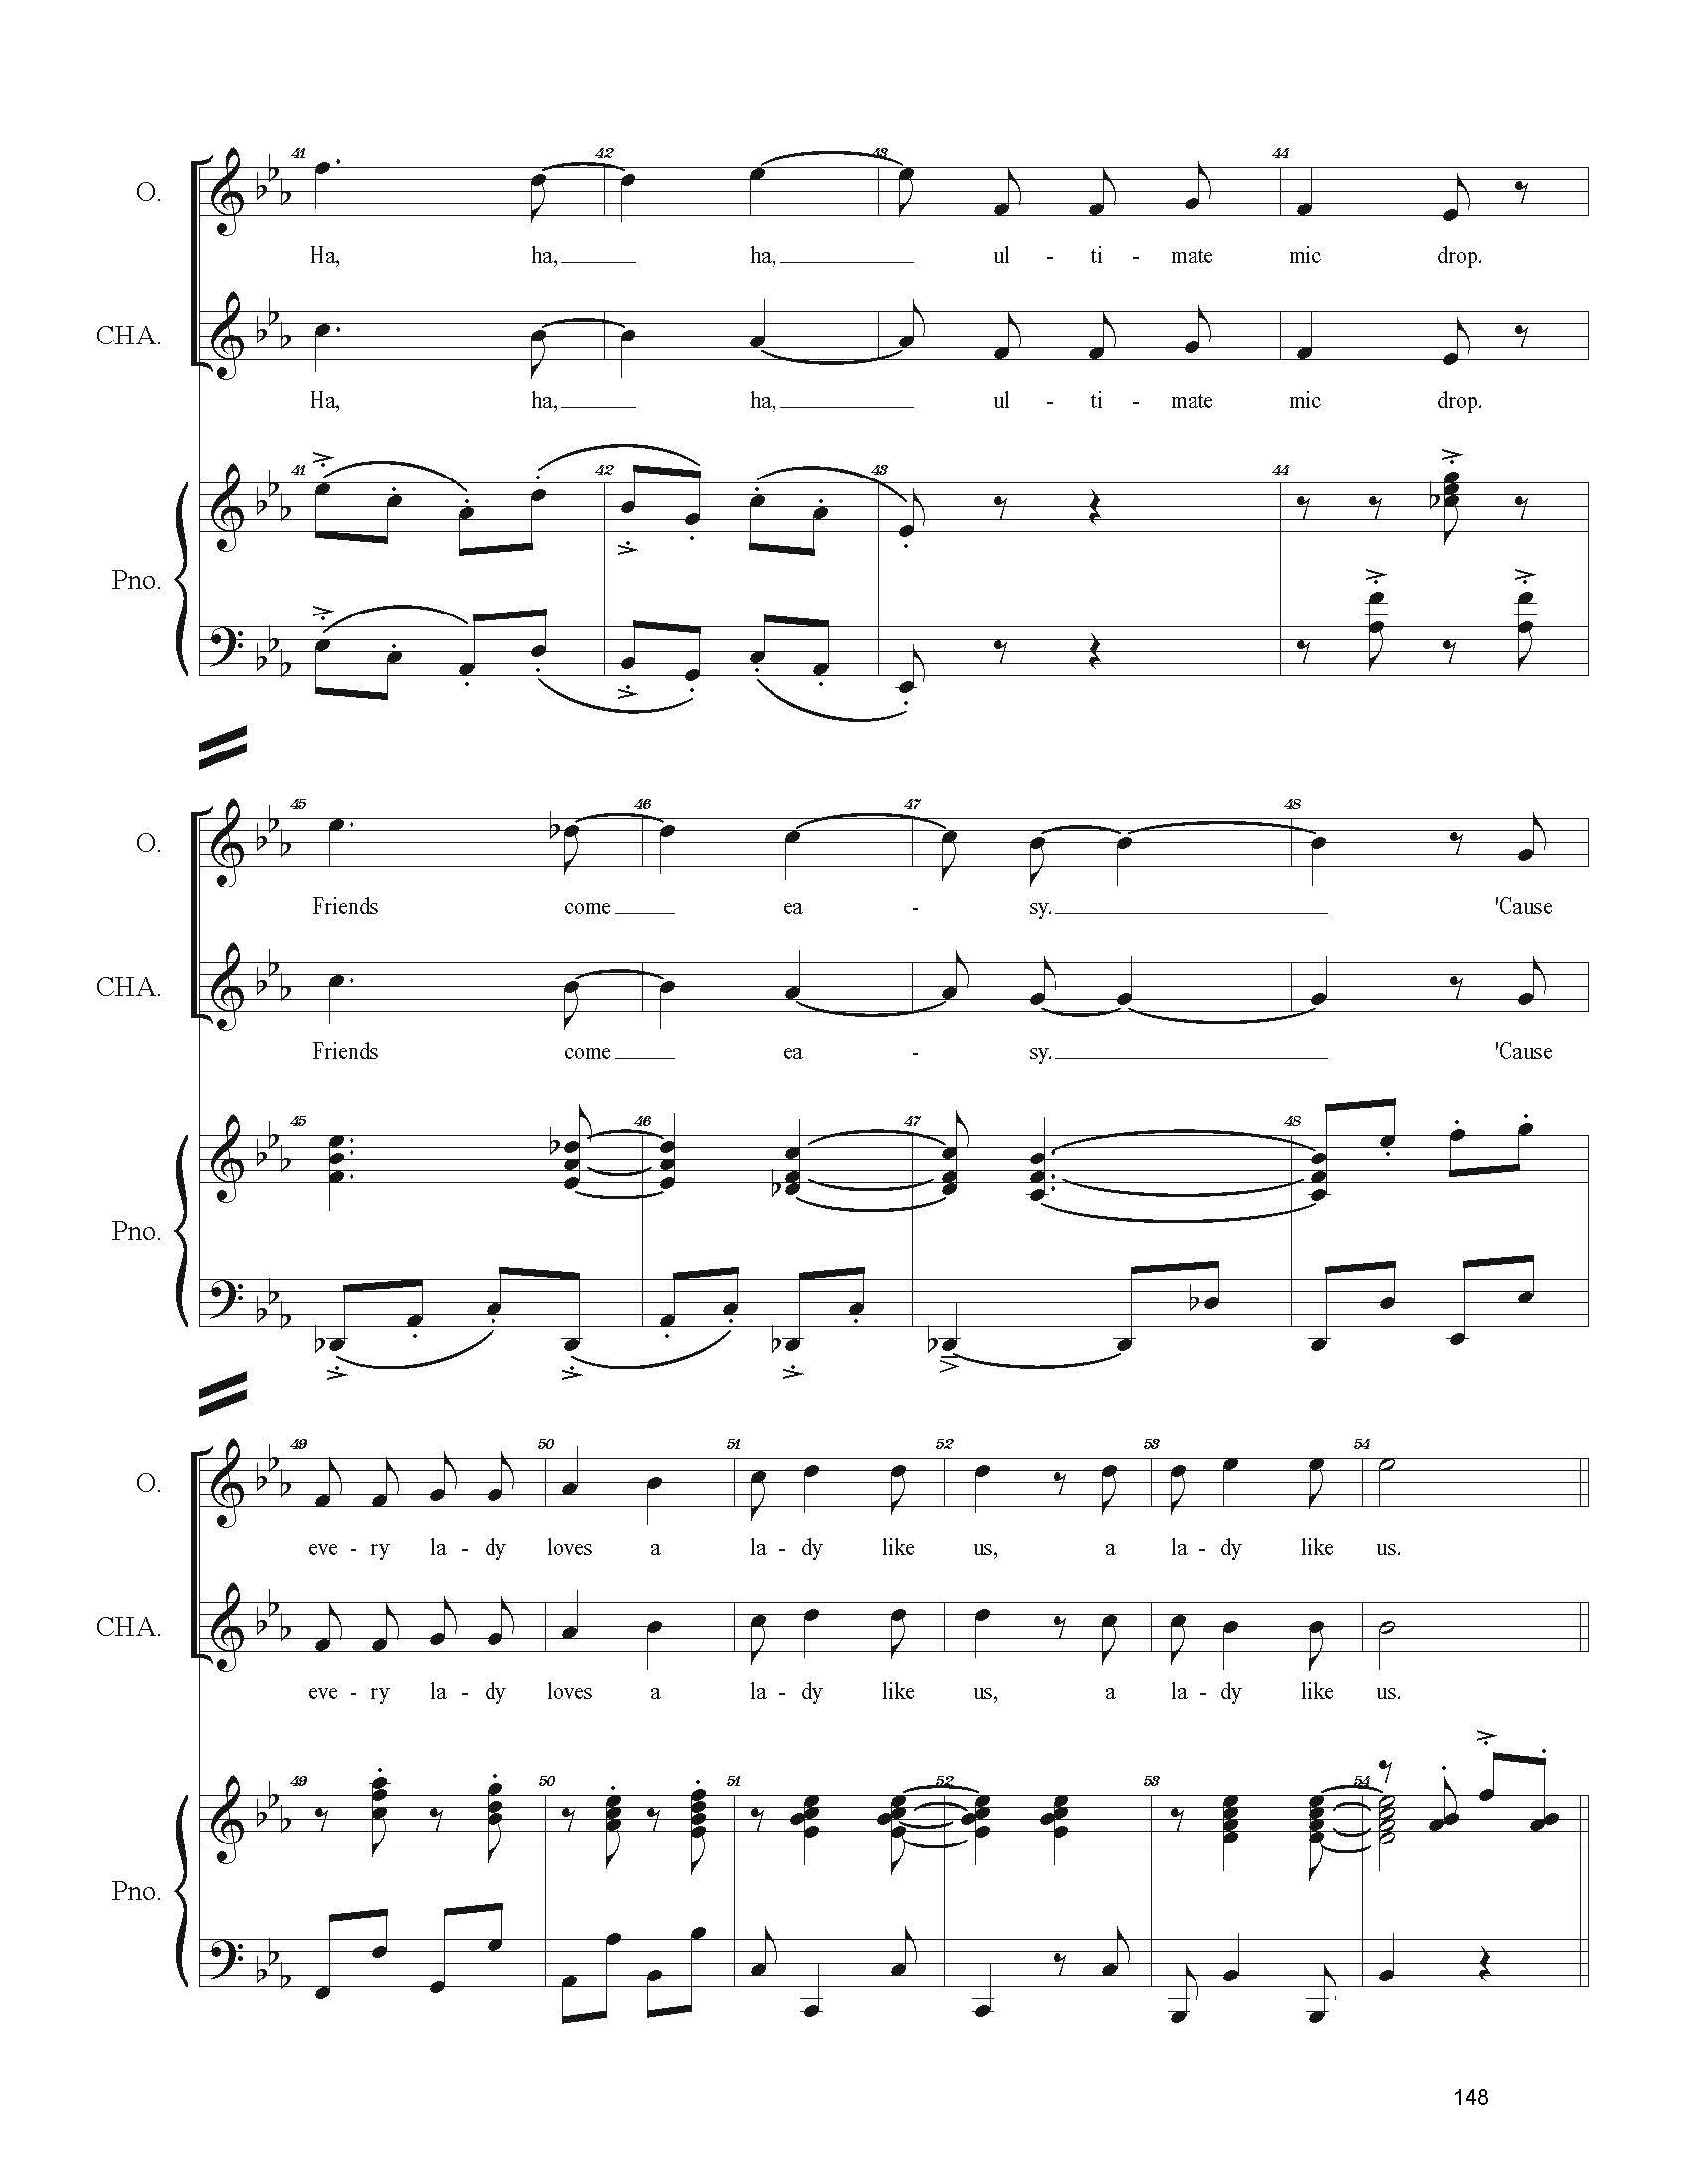 FULL PIANO VOCAL SCORE DRAFT 1 - Score_Page_148.jpg